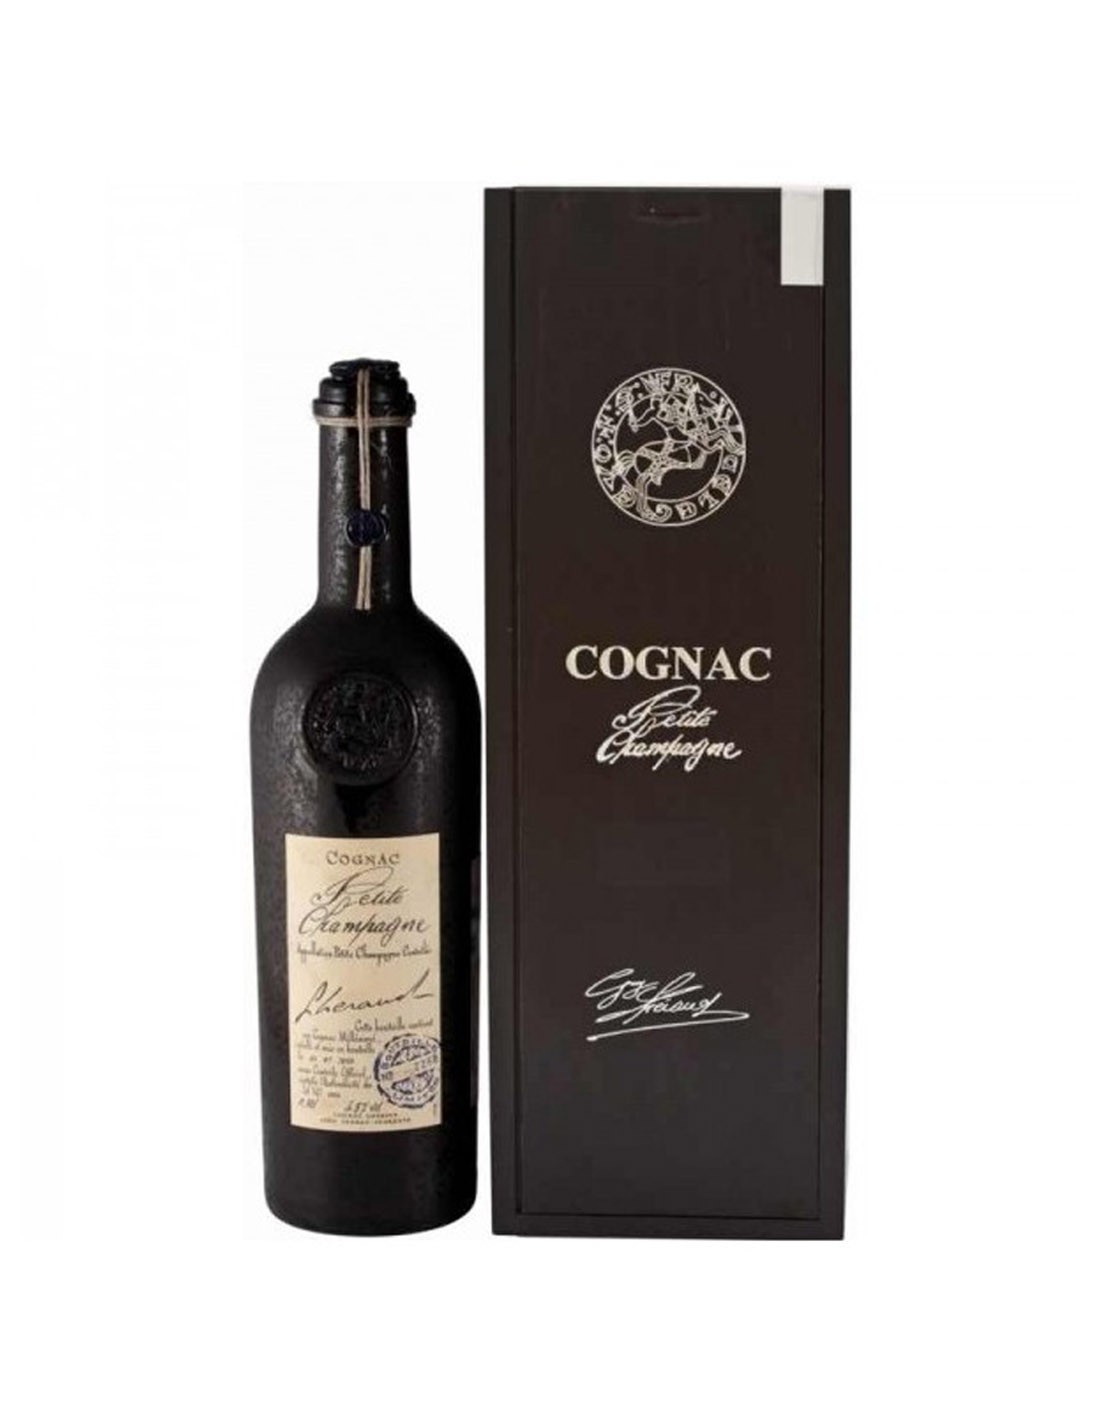 Coniac Lheraud Petite Champagne 1980, 46% Alcool, 0.7 l